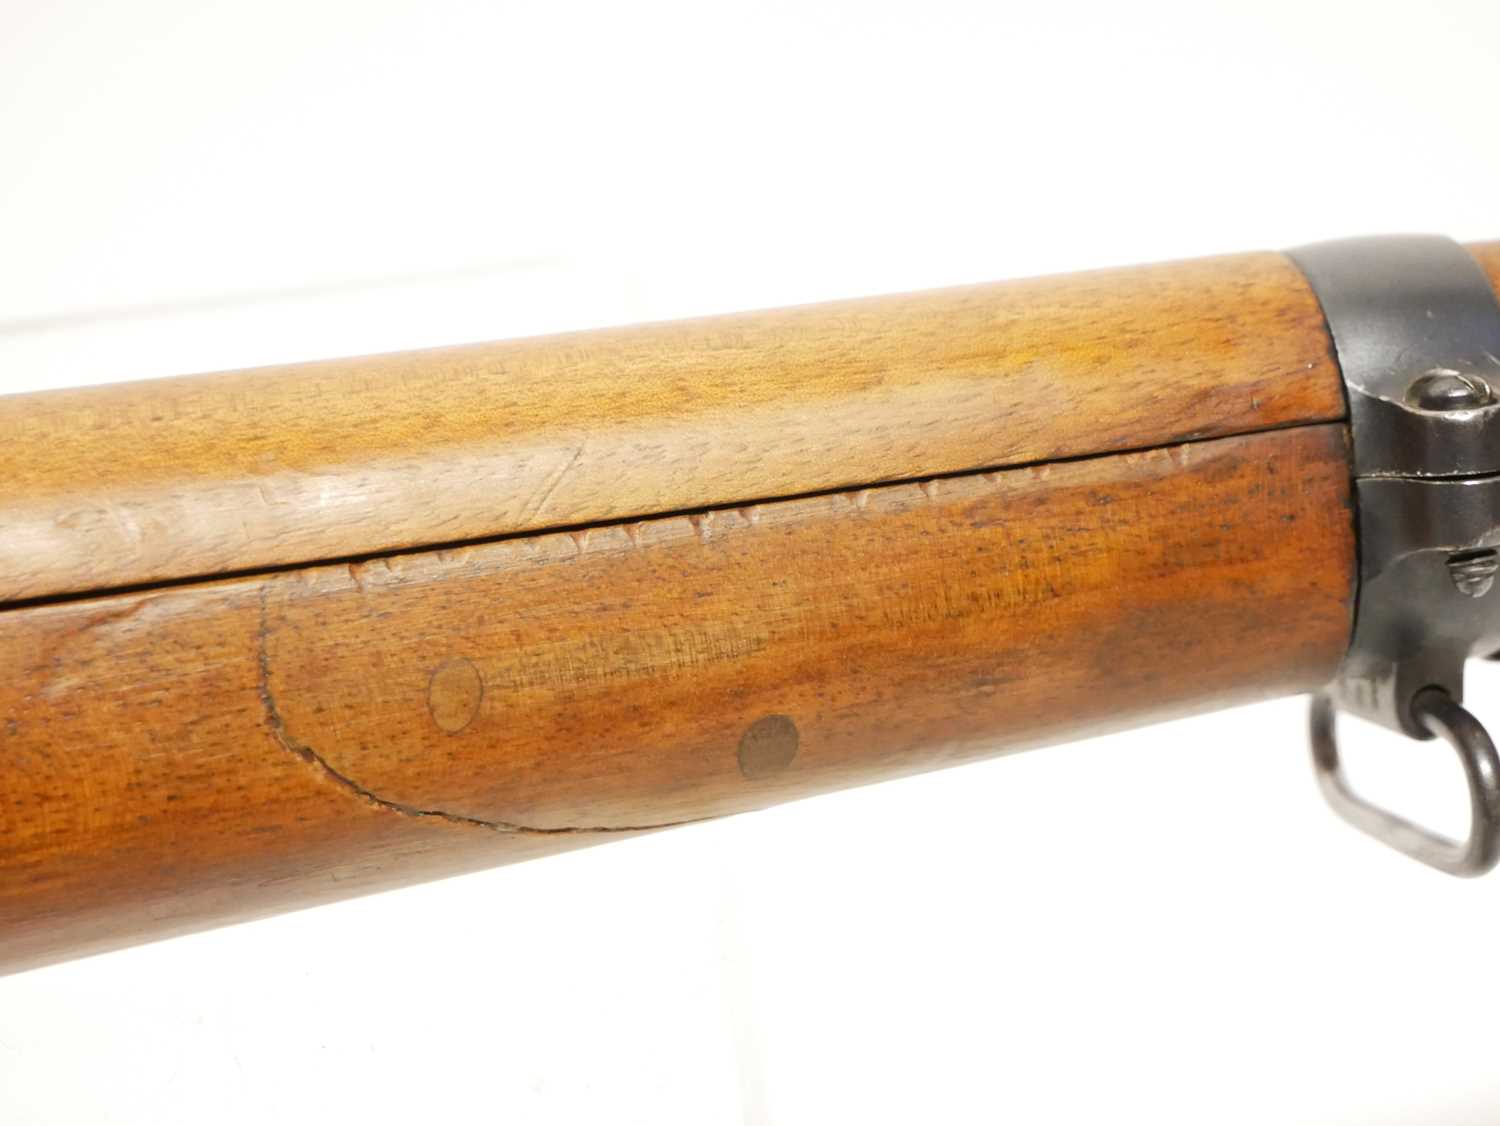 Schmidt-Rubin 7.5x53.5mm Kadett Model 1897 straight pull single shot rifle, 23 inch barrel with - Image 7 of 14